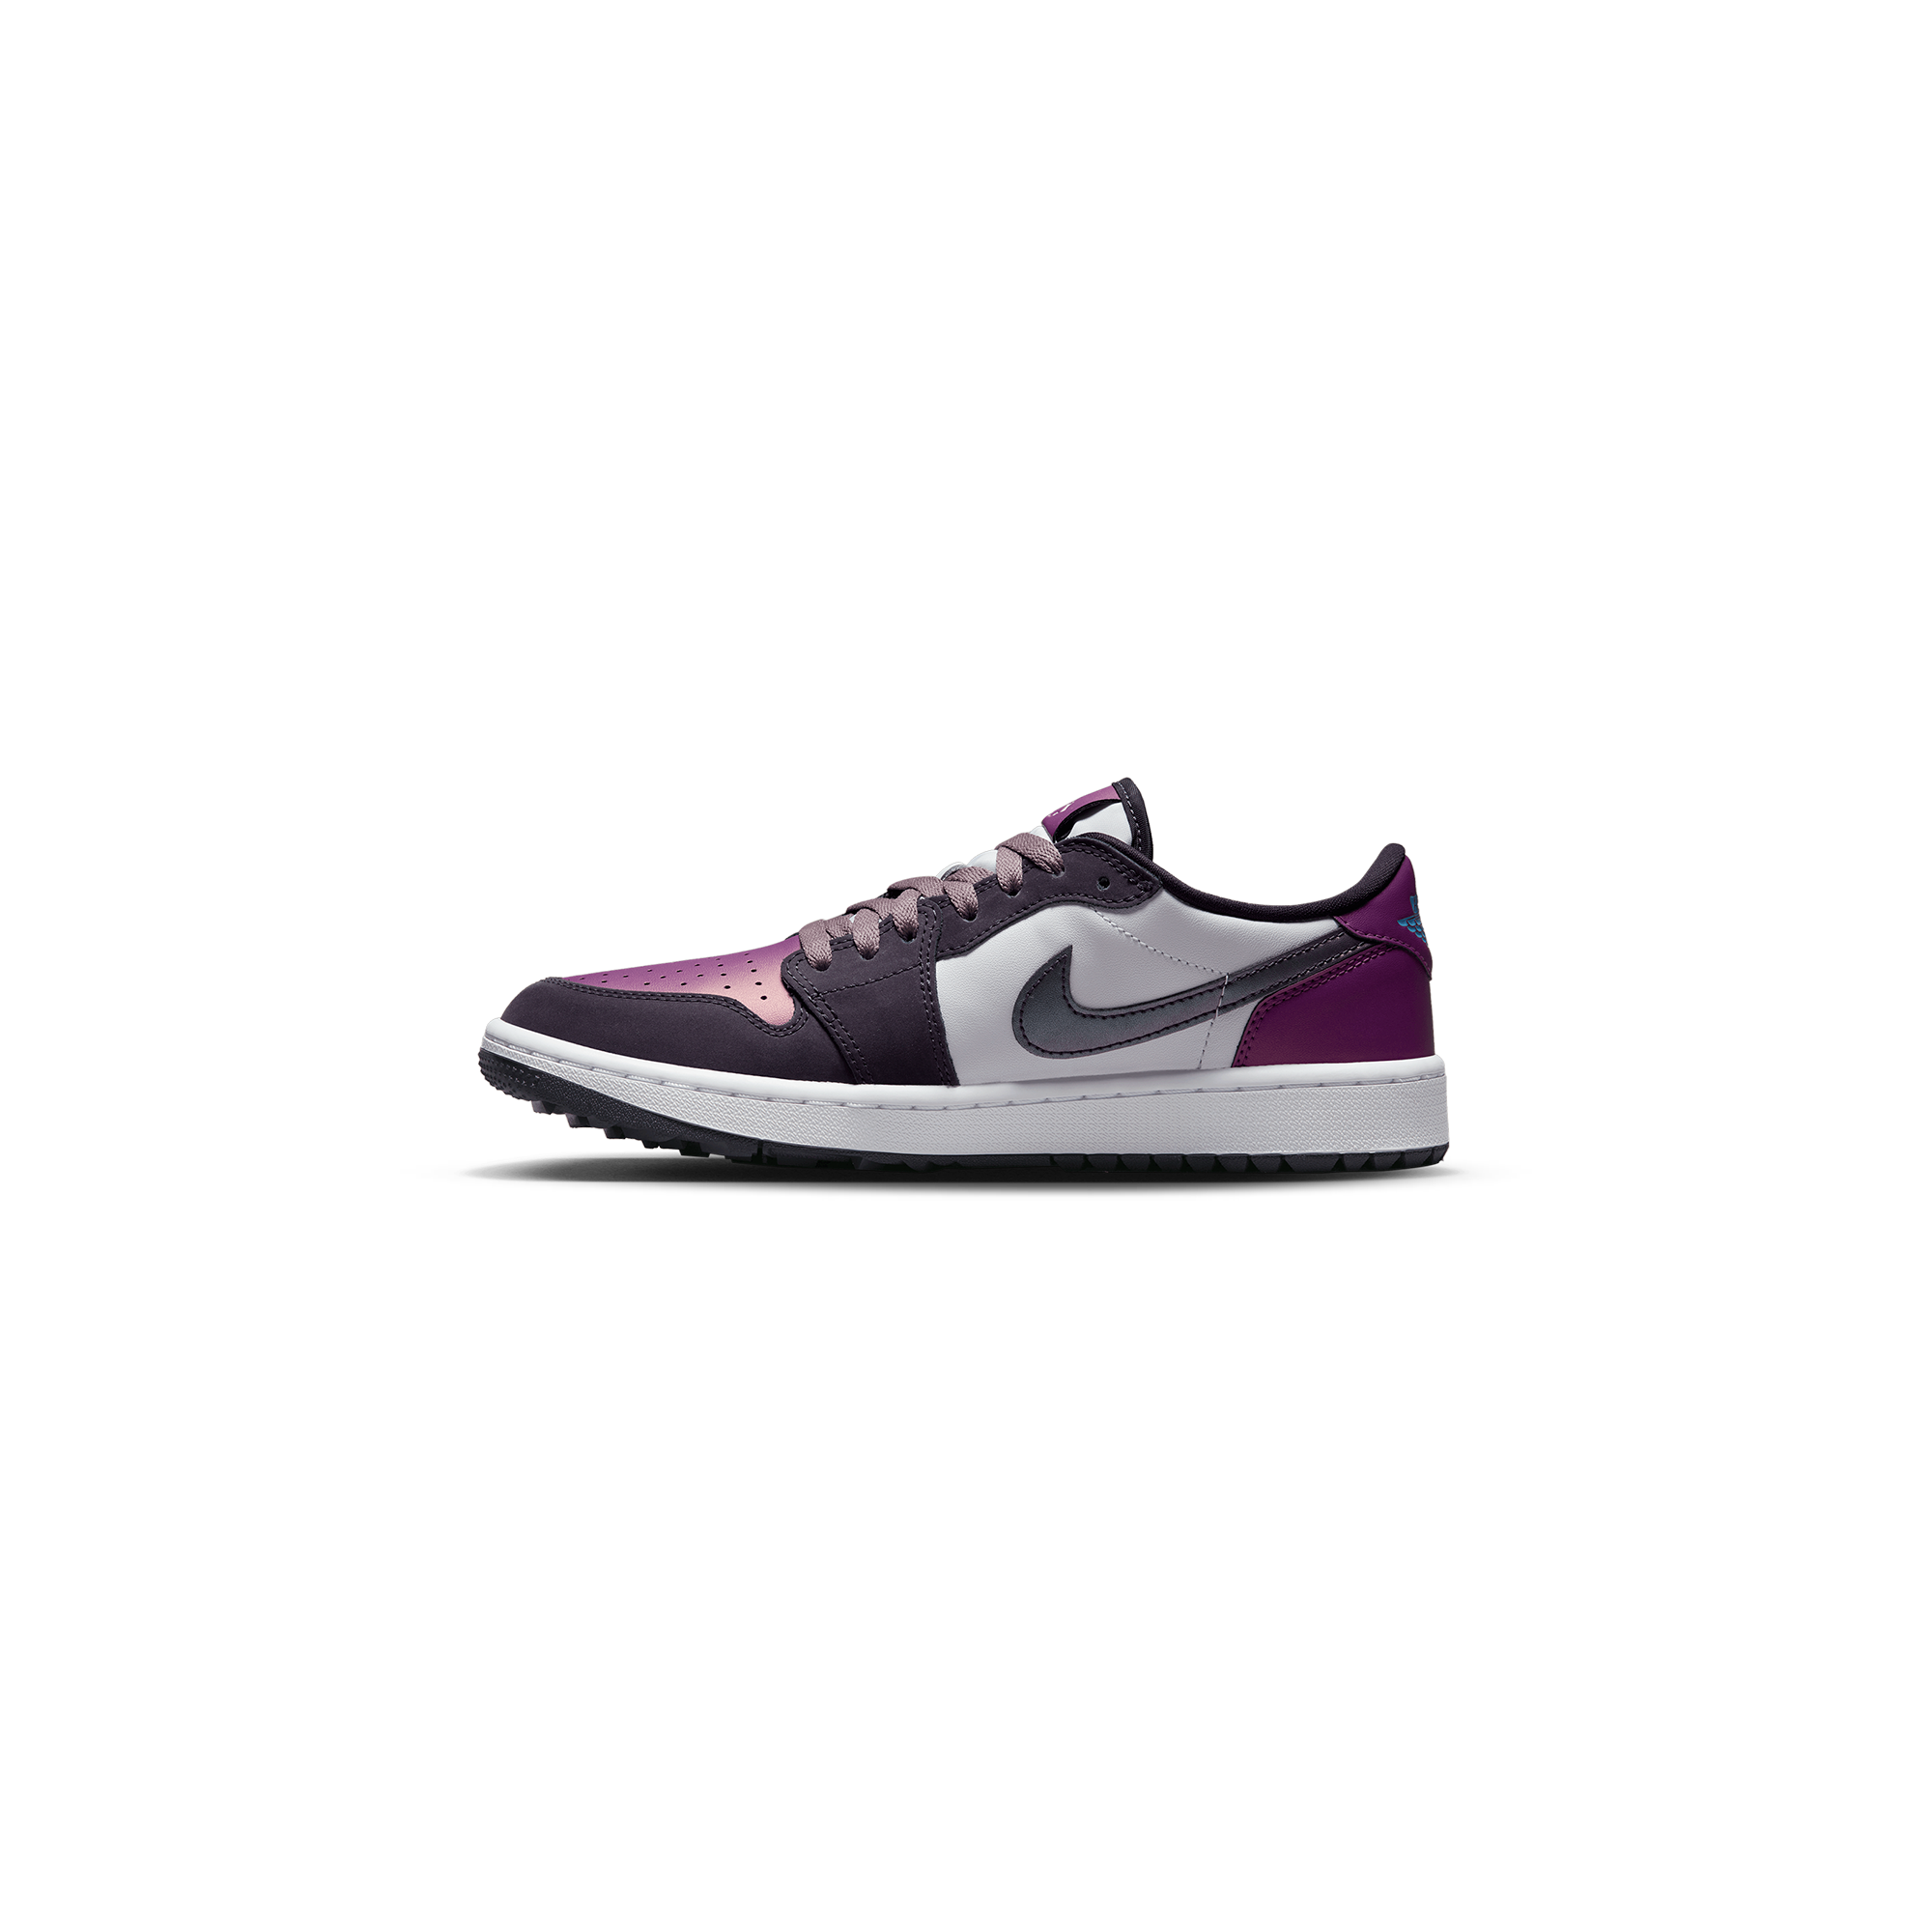 Nike Air Jordan 1 Low sneakers in purple & white